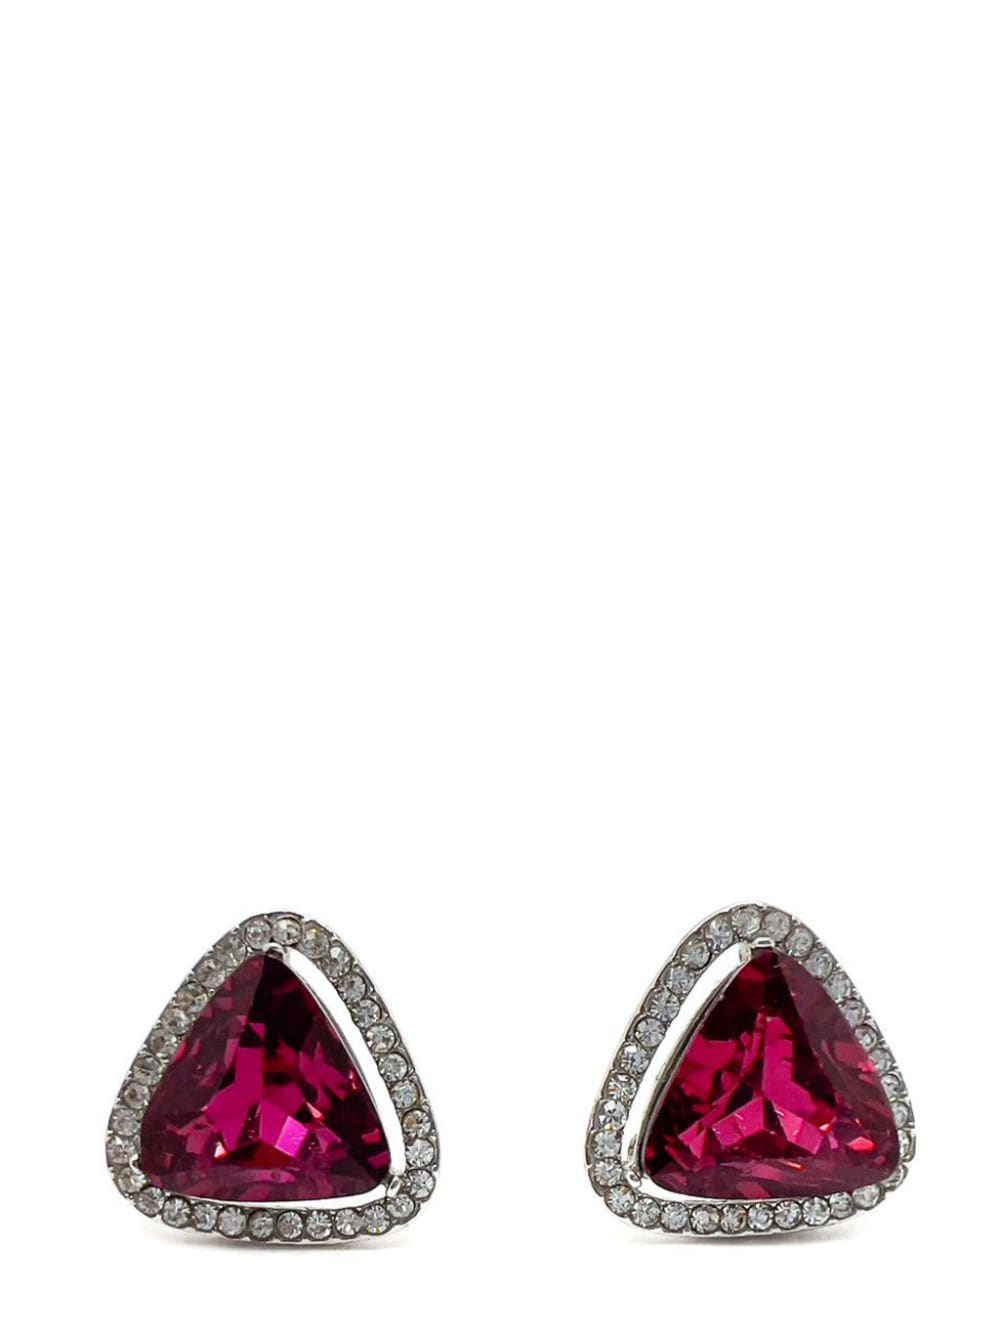 Jennifer Gibson Jewellery Vintage Pink Trillion Crystal Earrings 1970s von Jennifer Gibson Jewellery